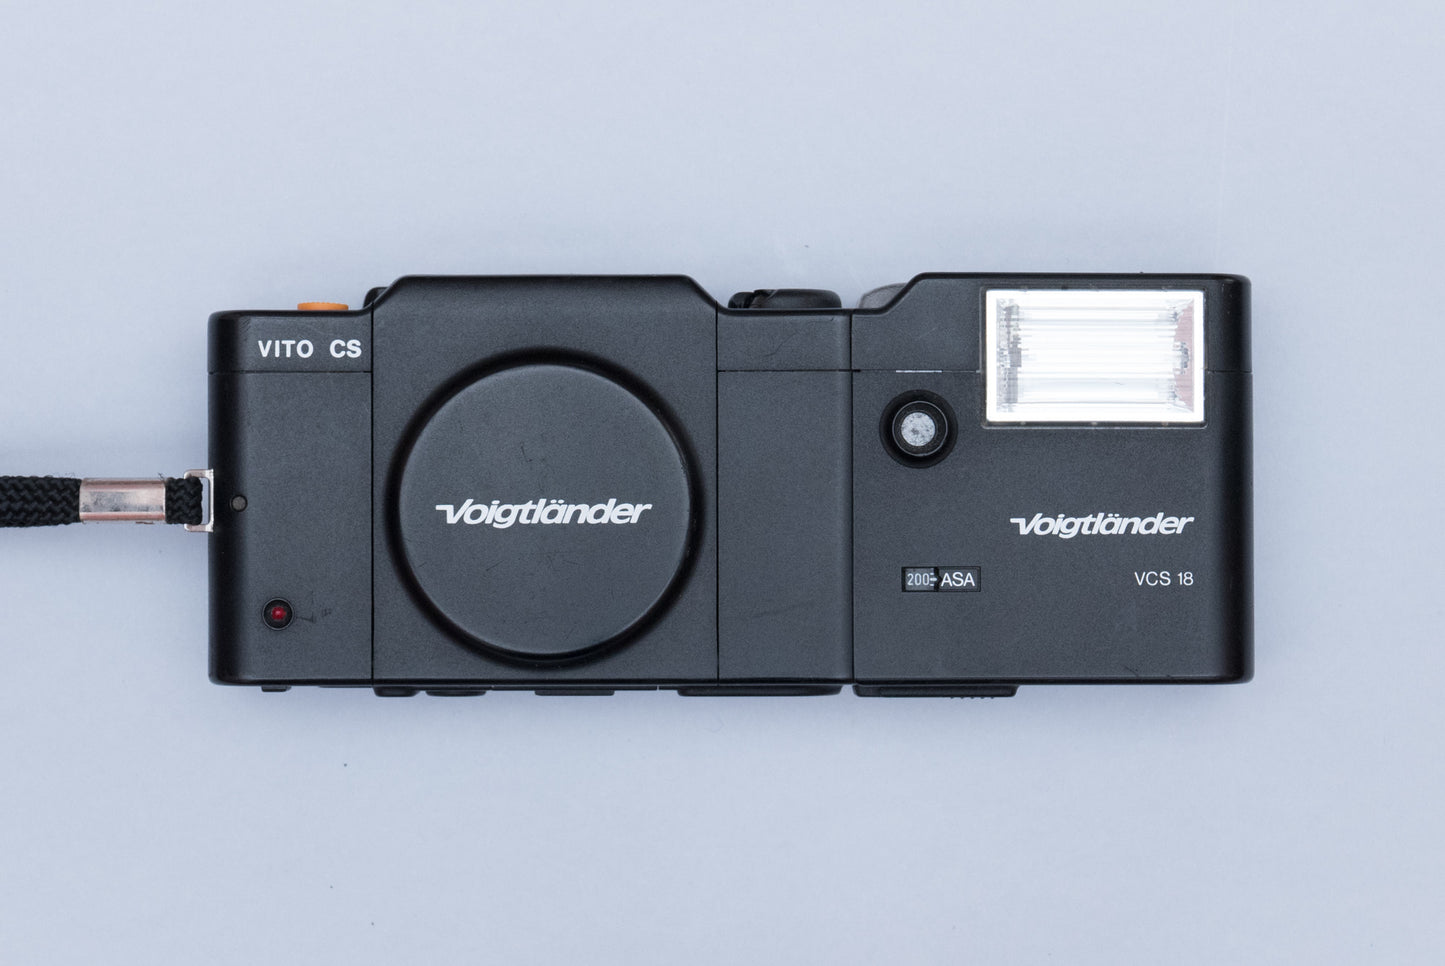 Voigtlander VITO CS 35mm Compact Film Camera